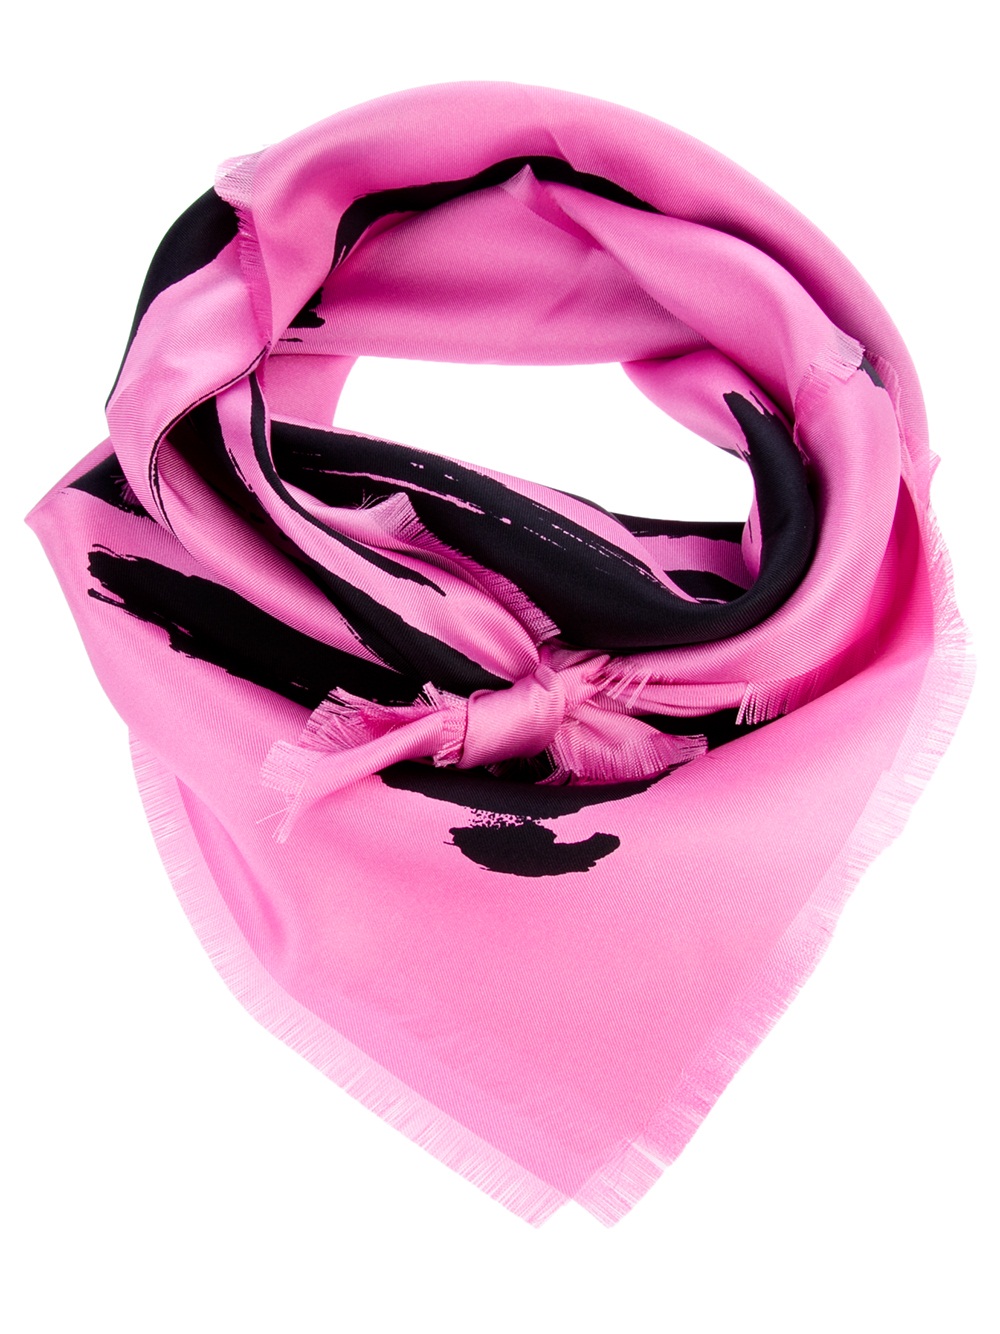 Balenciaga Silk Scarf in Pink & Purple (Pink) - Lyst